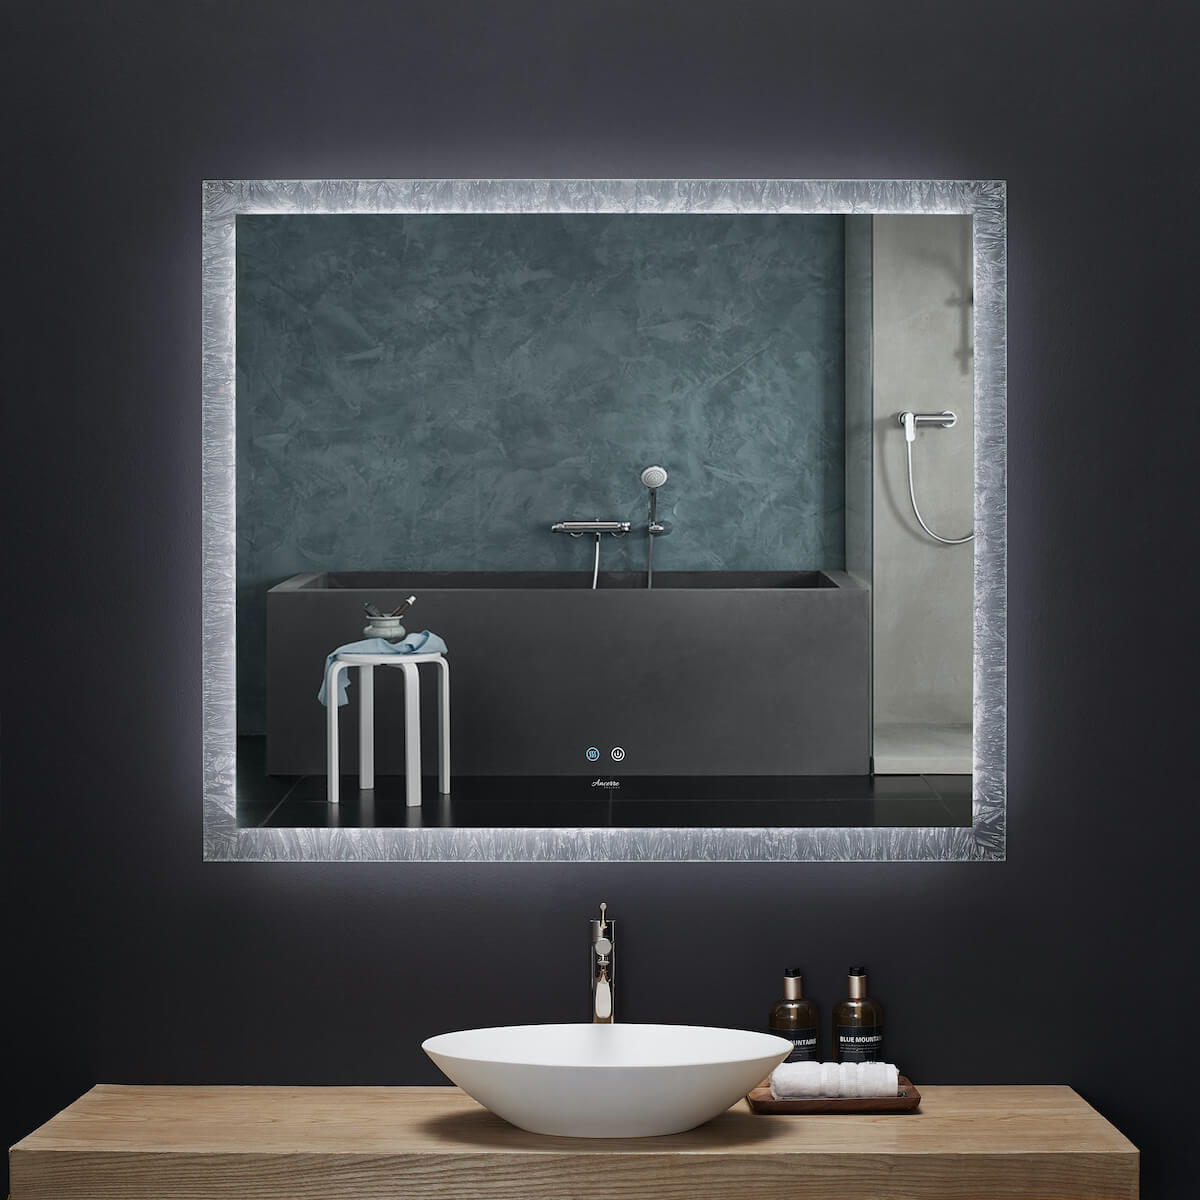 Ancerre Designs 48" LED Frysta Mirror LEDM-FRYSTA-48 Dimmed